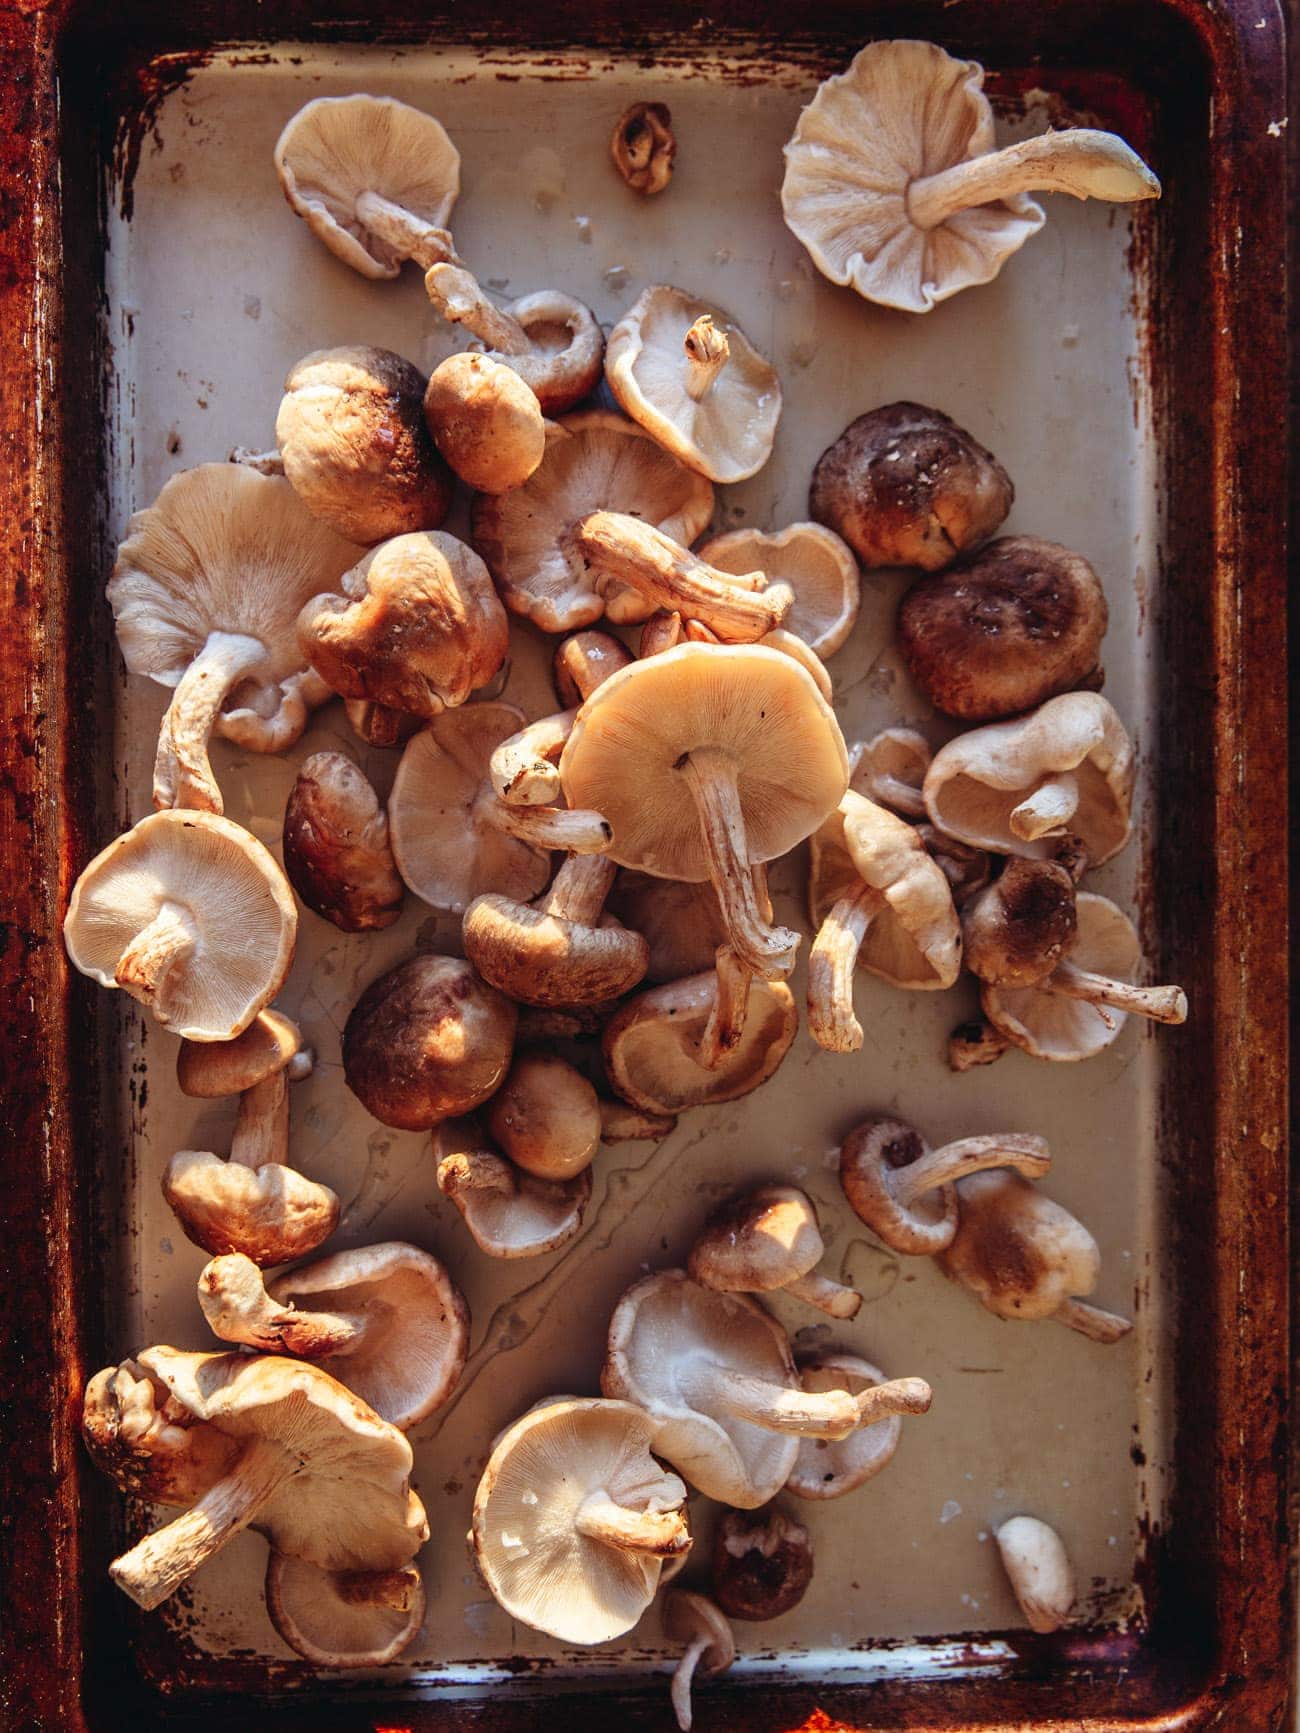 Celeriac Risotto with Roasted Mushrooms by Izy Hossack